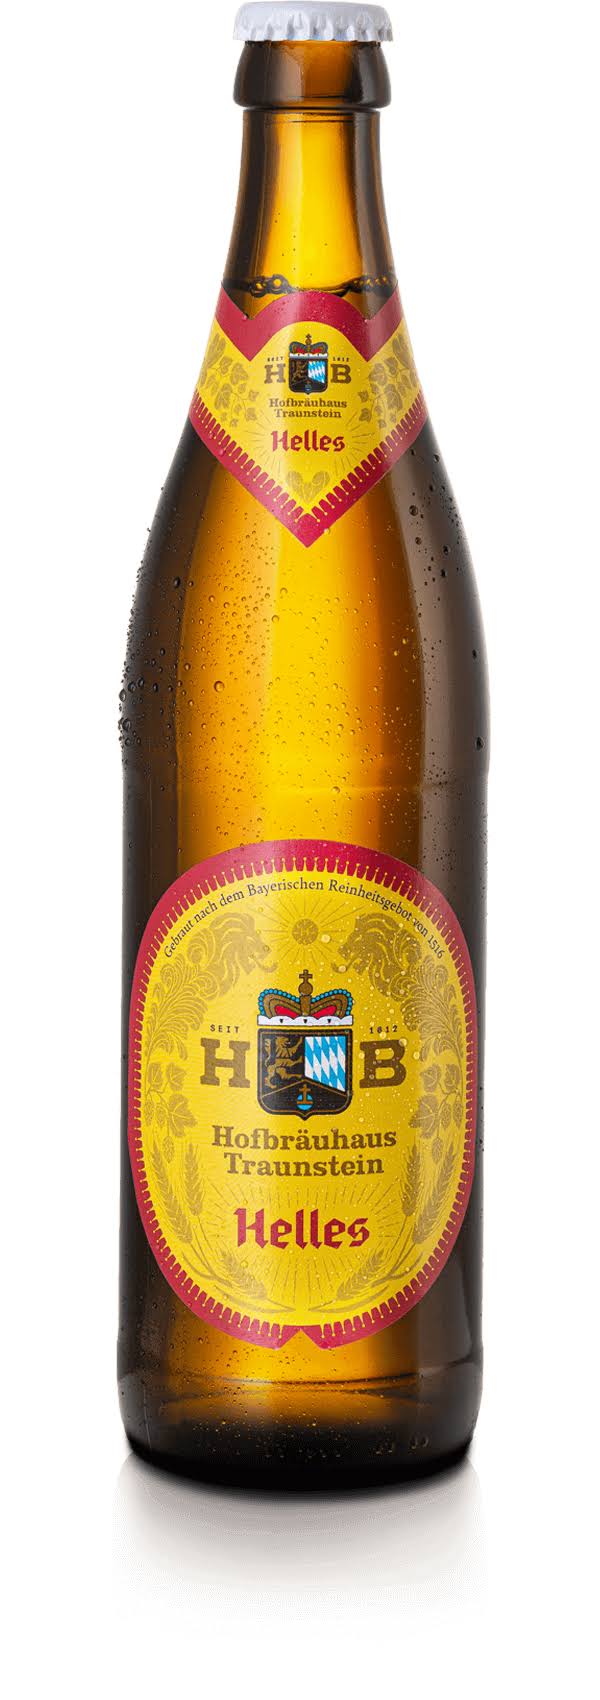 Hofbräuhaus Traunstein- Helles 5.3% ABV 500ml Bottle